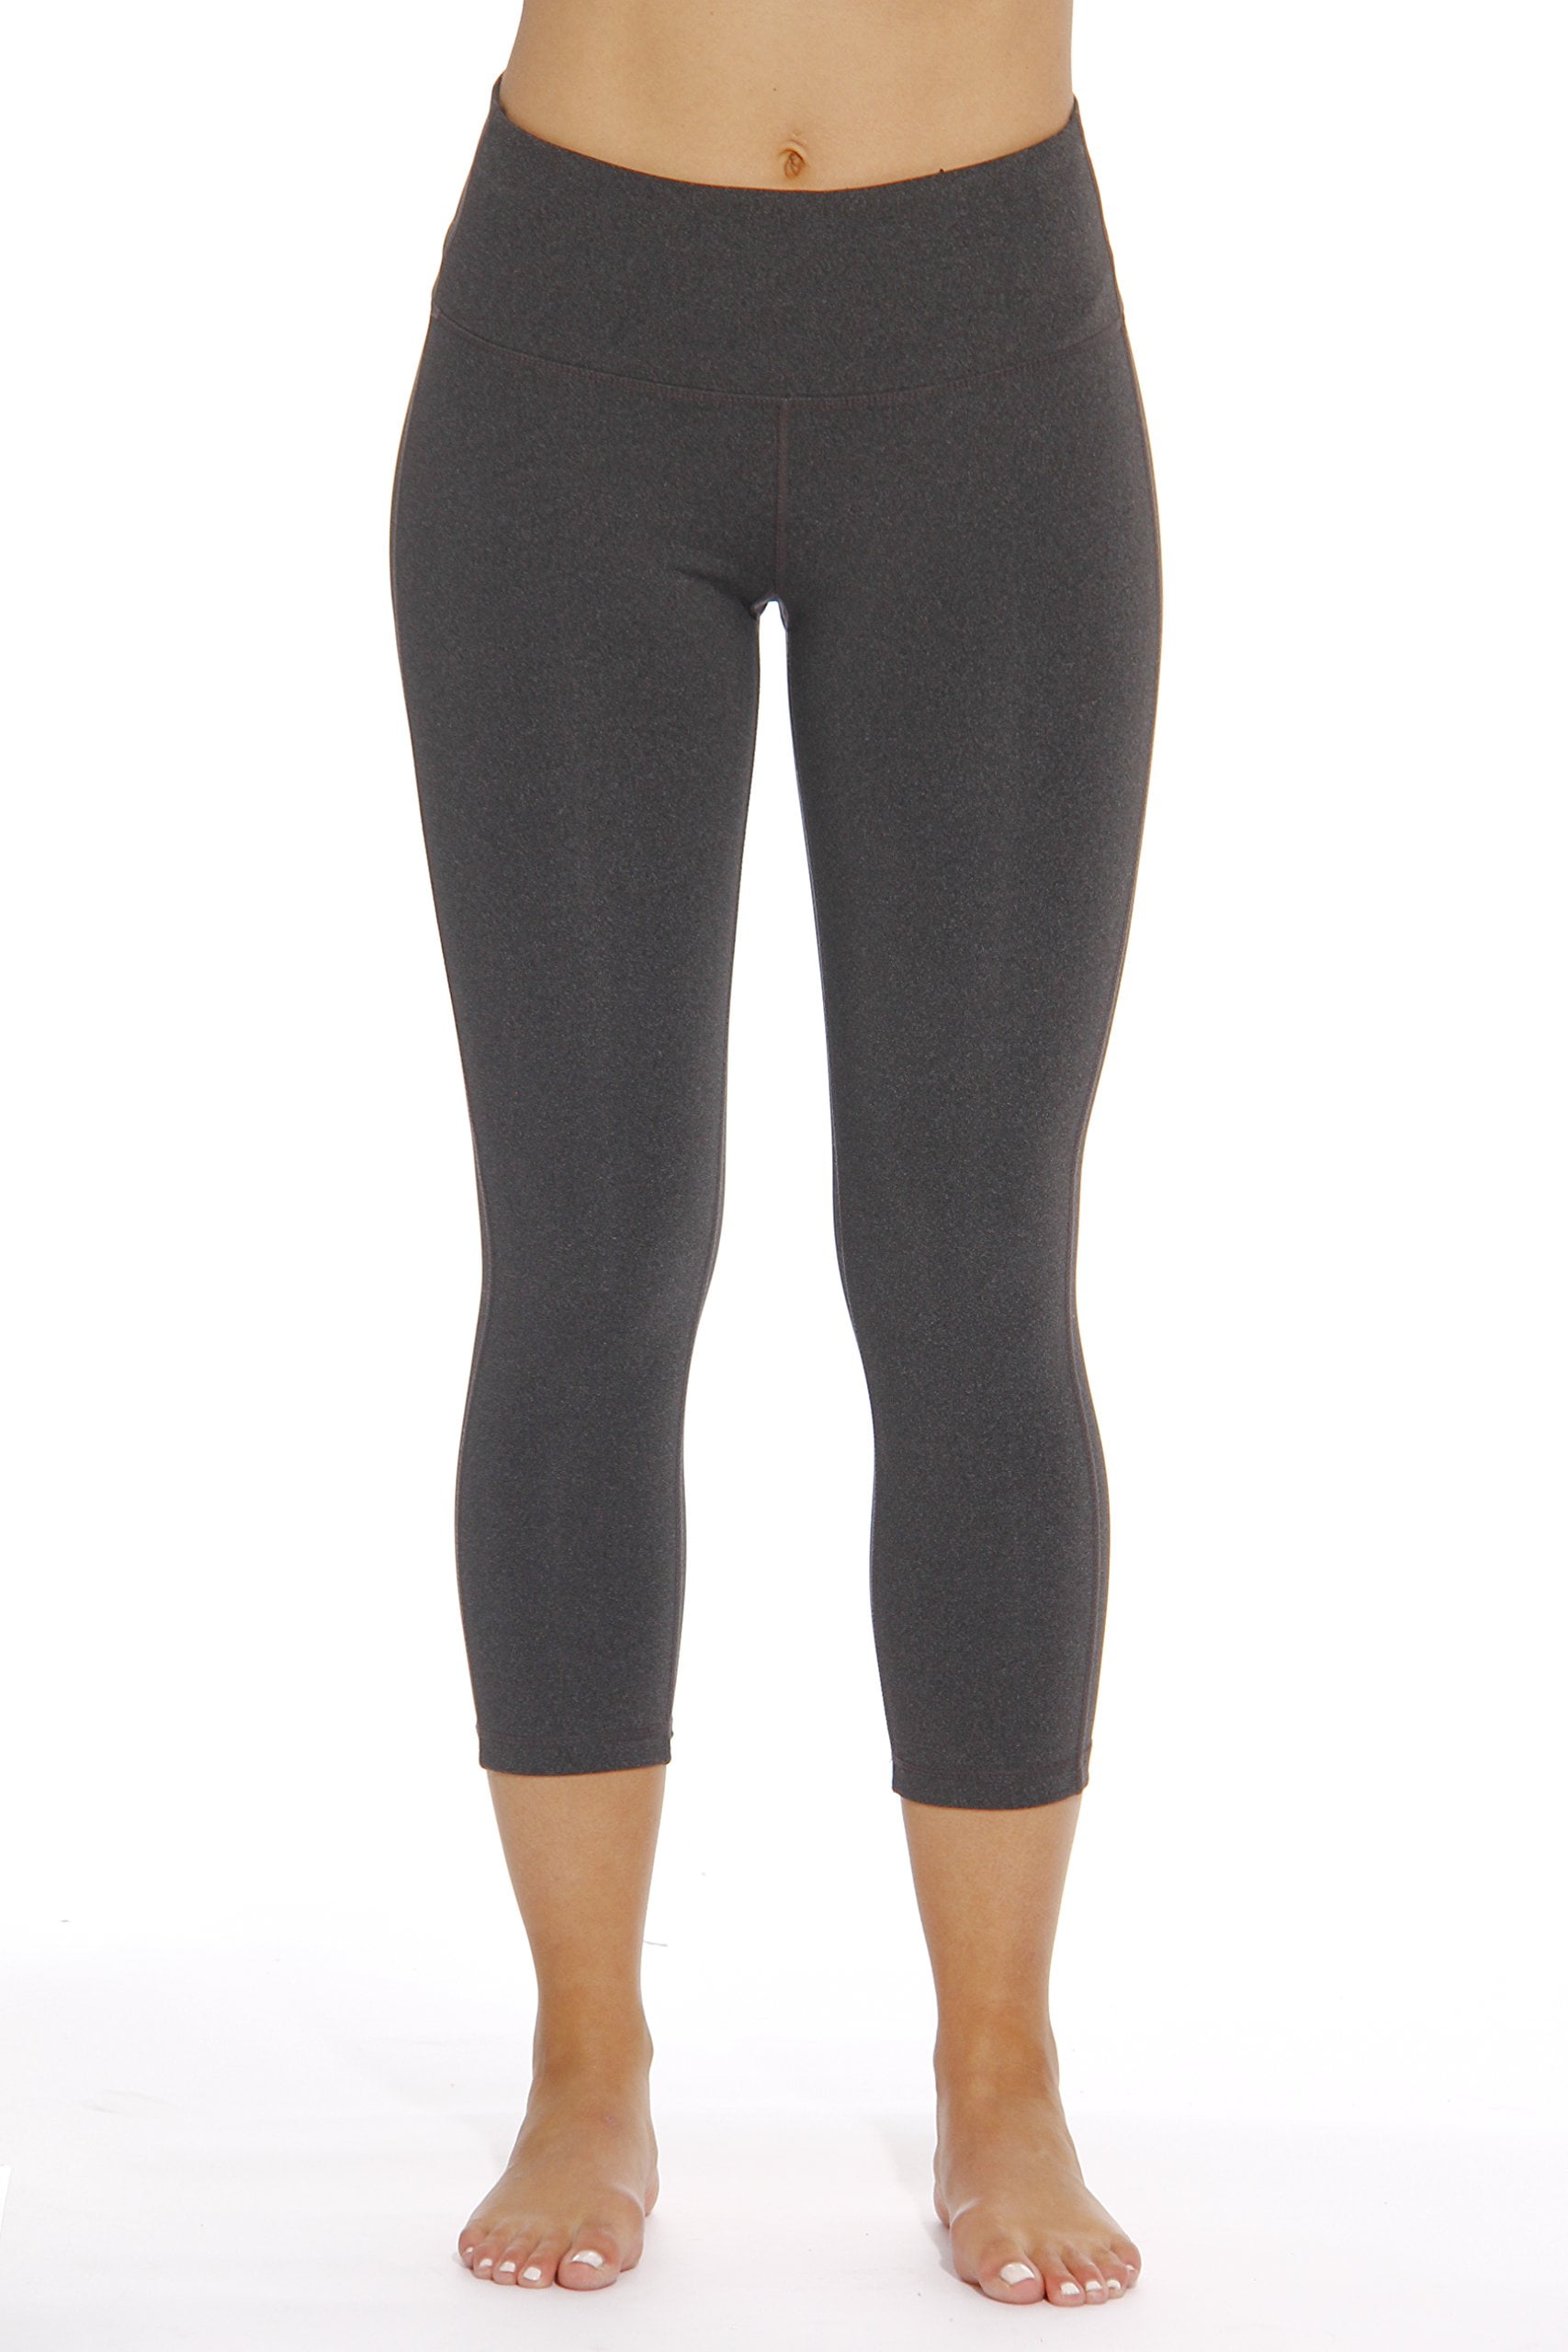 Just Love Yoga Capri Pants for Women (Charcoal, Small)